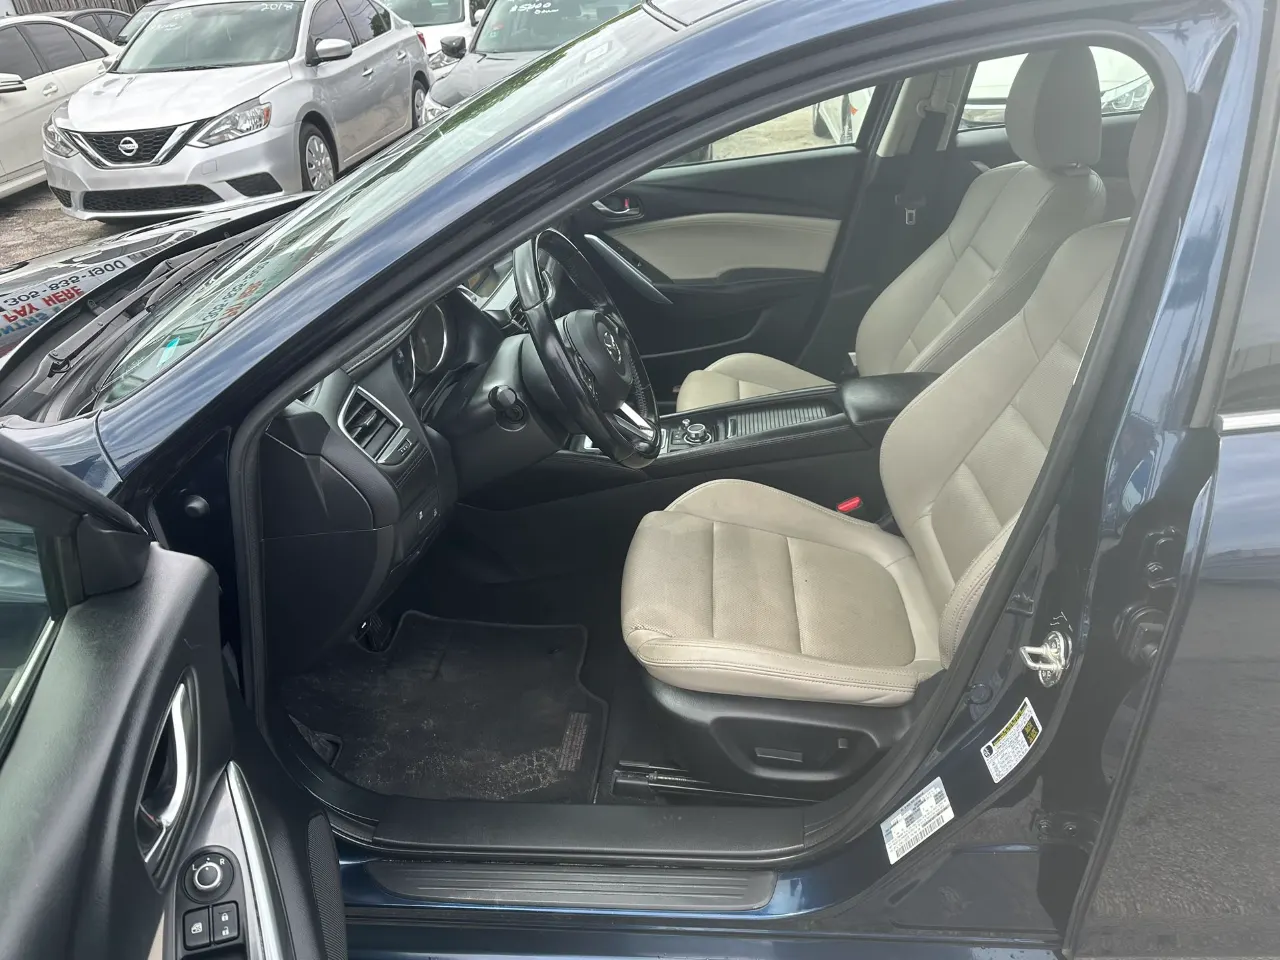 used 2017 Mazda 6 - interior view 1